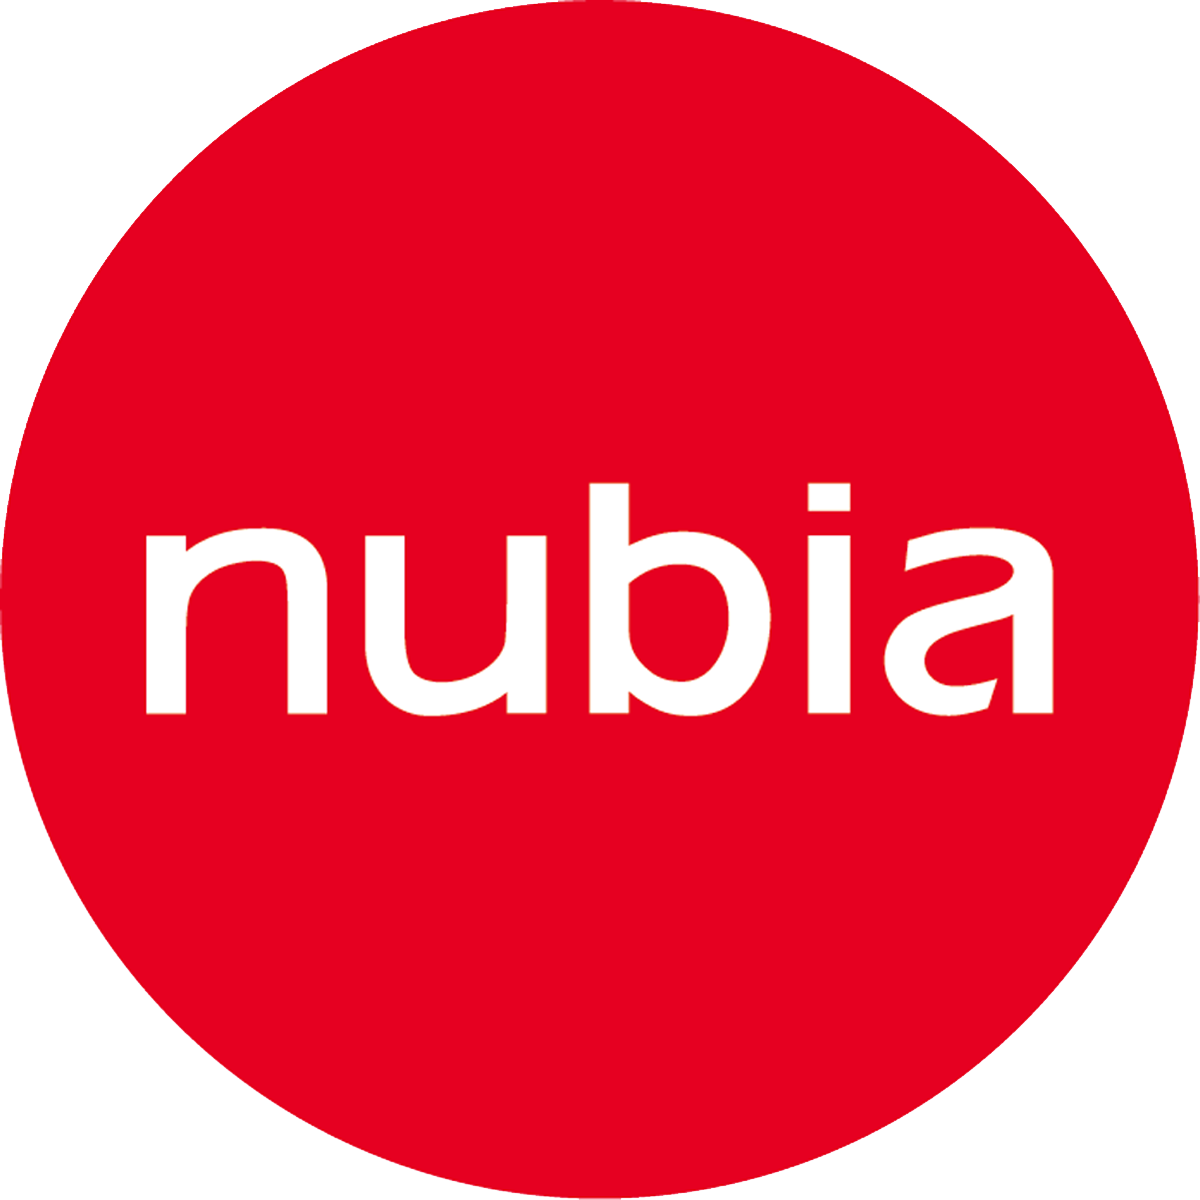 Nubia Logo Transparent Image